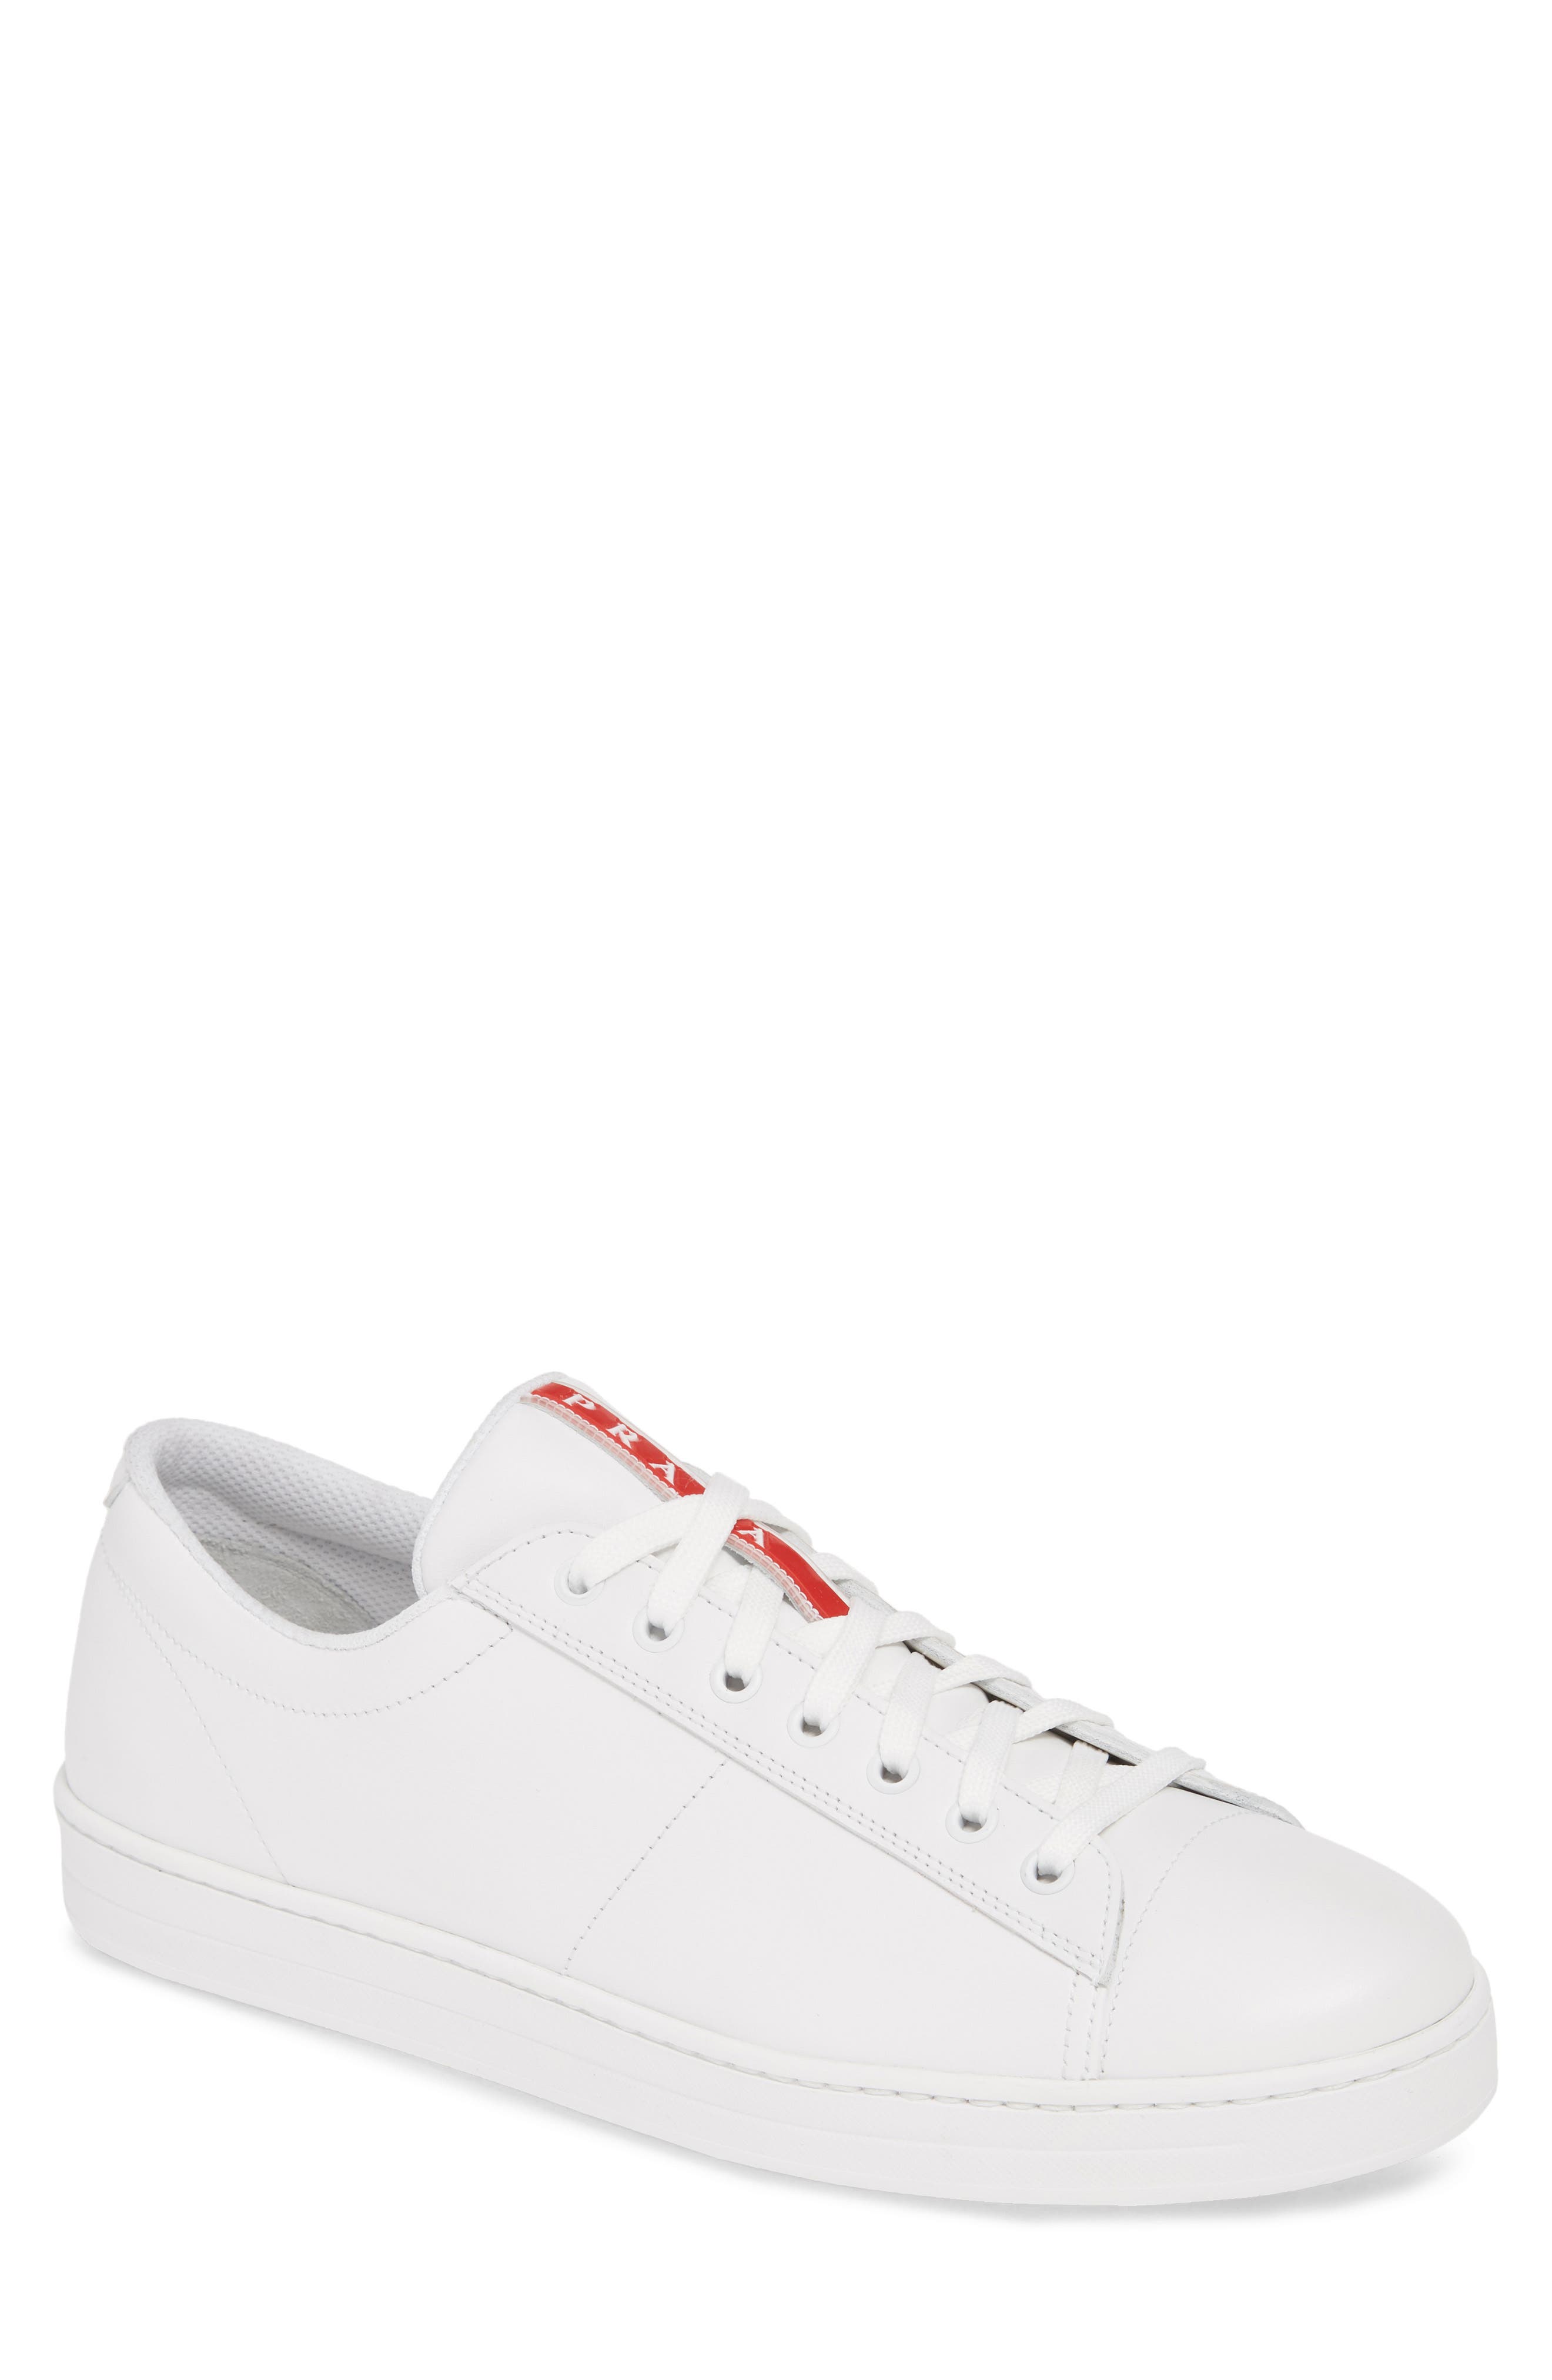 all white prada sneakers